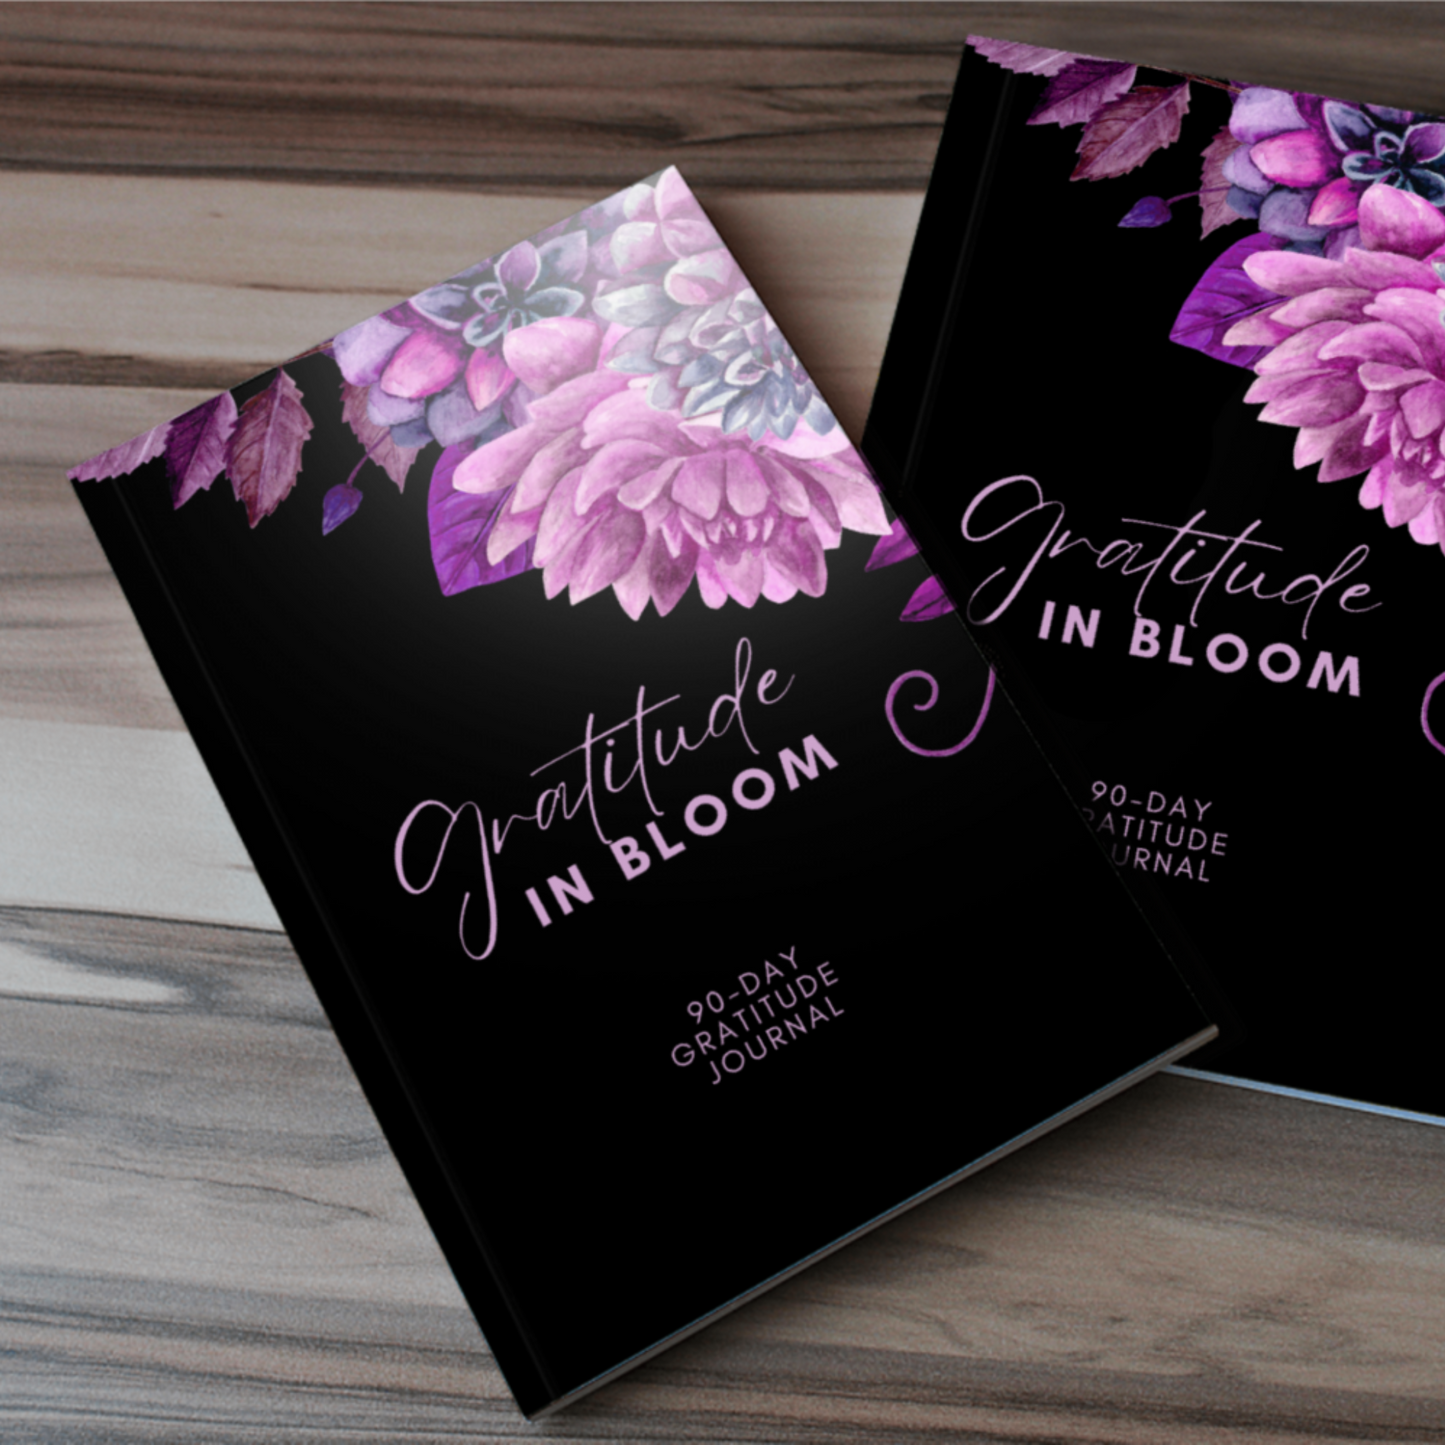 Gratitude in Bloom-90-Day Gratitude Journal